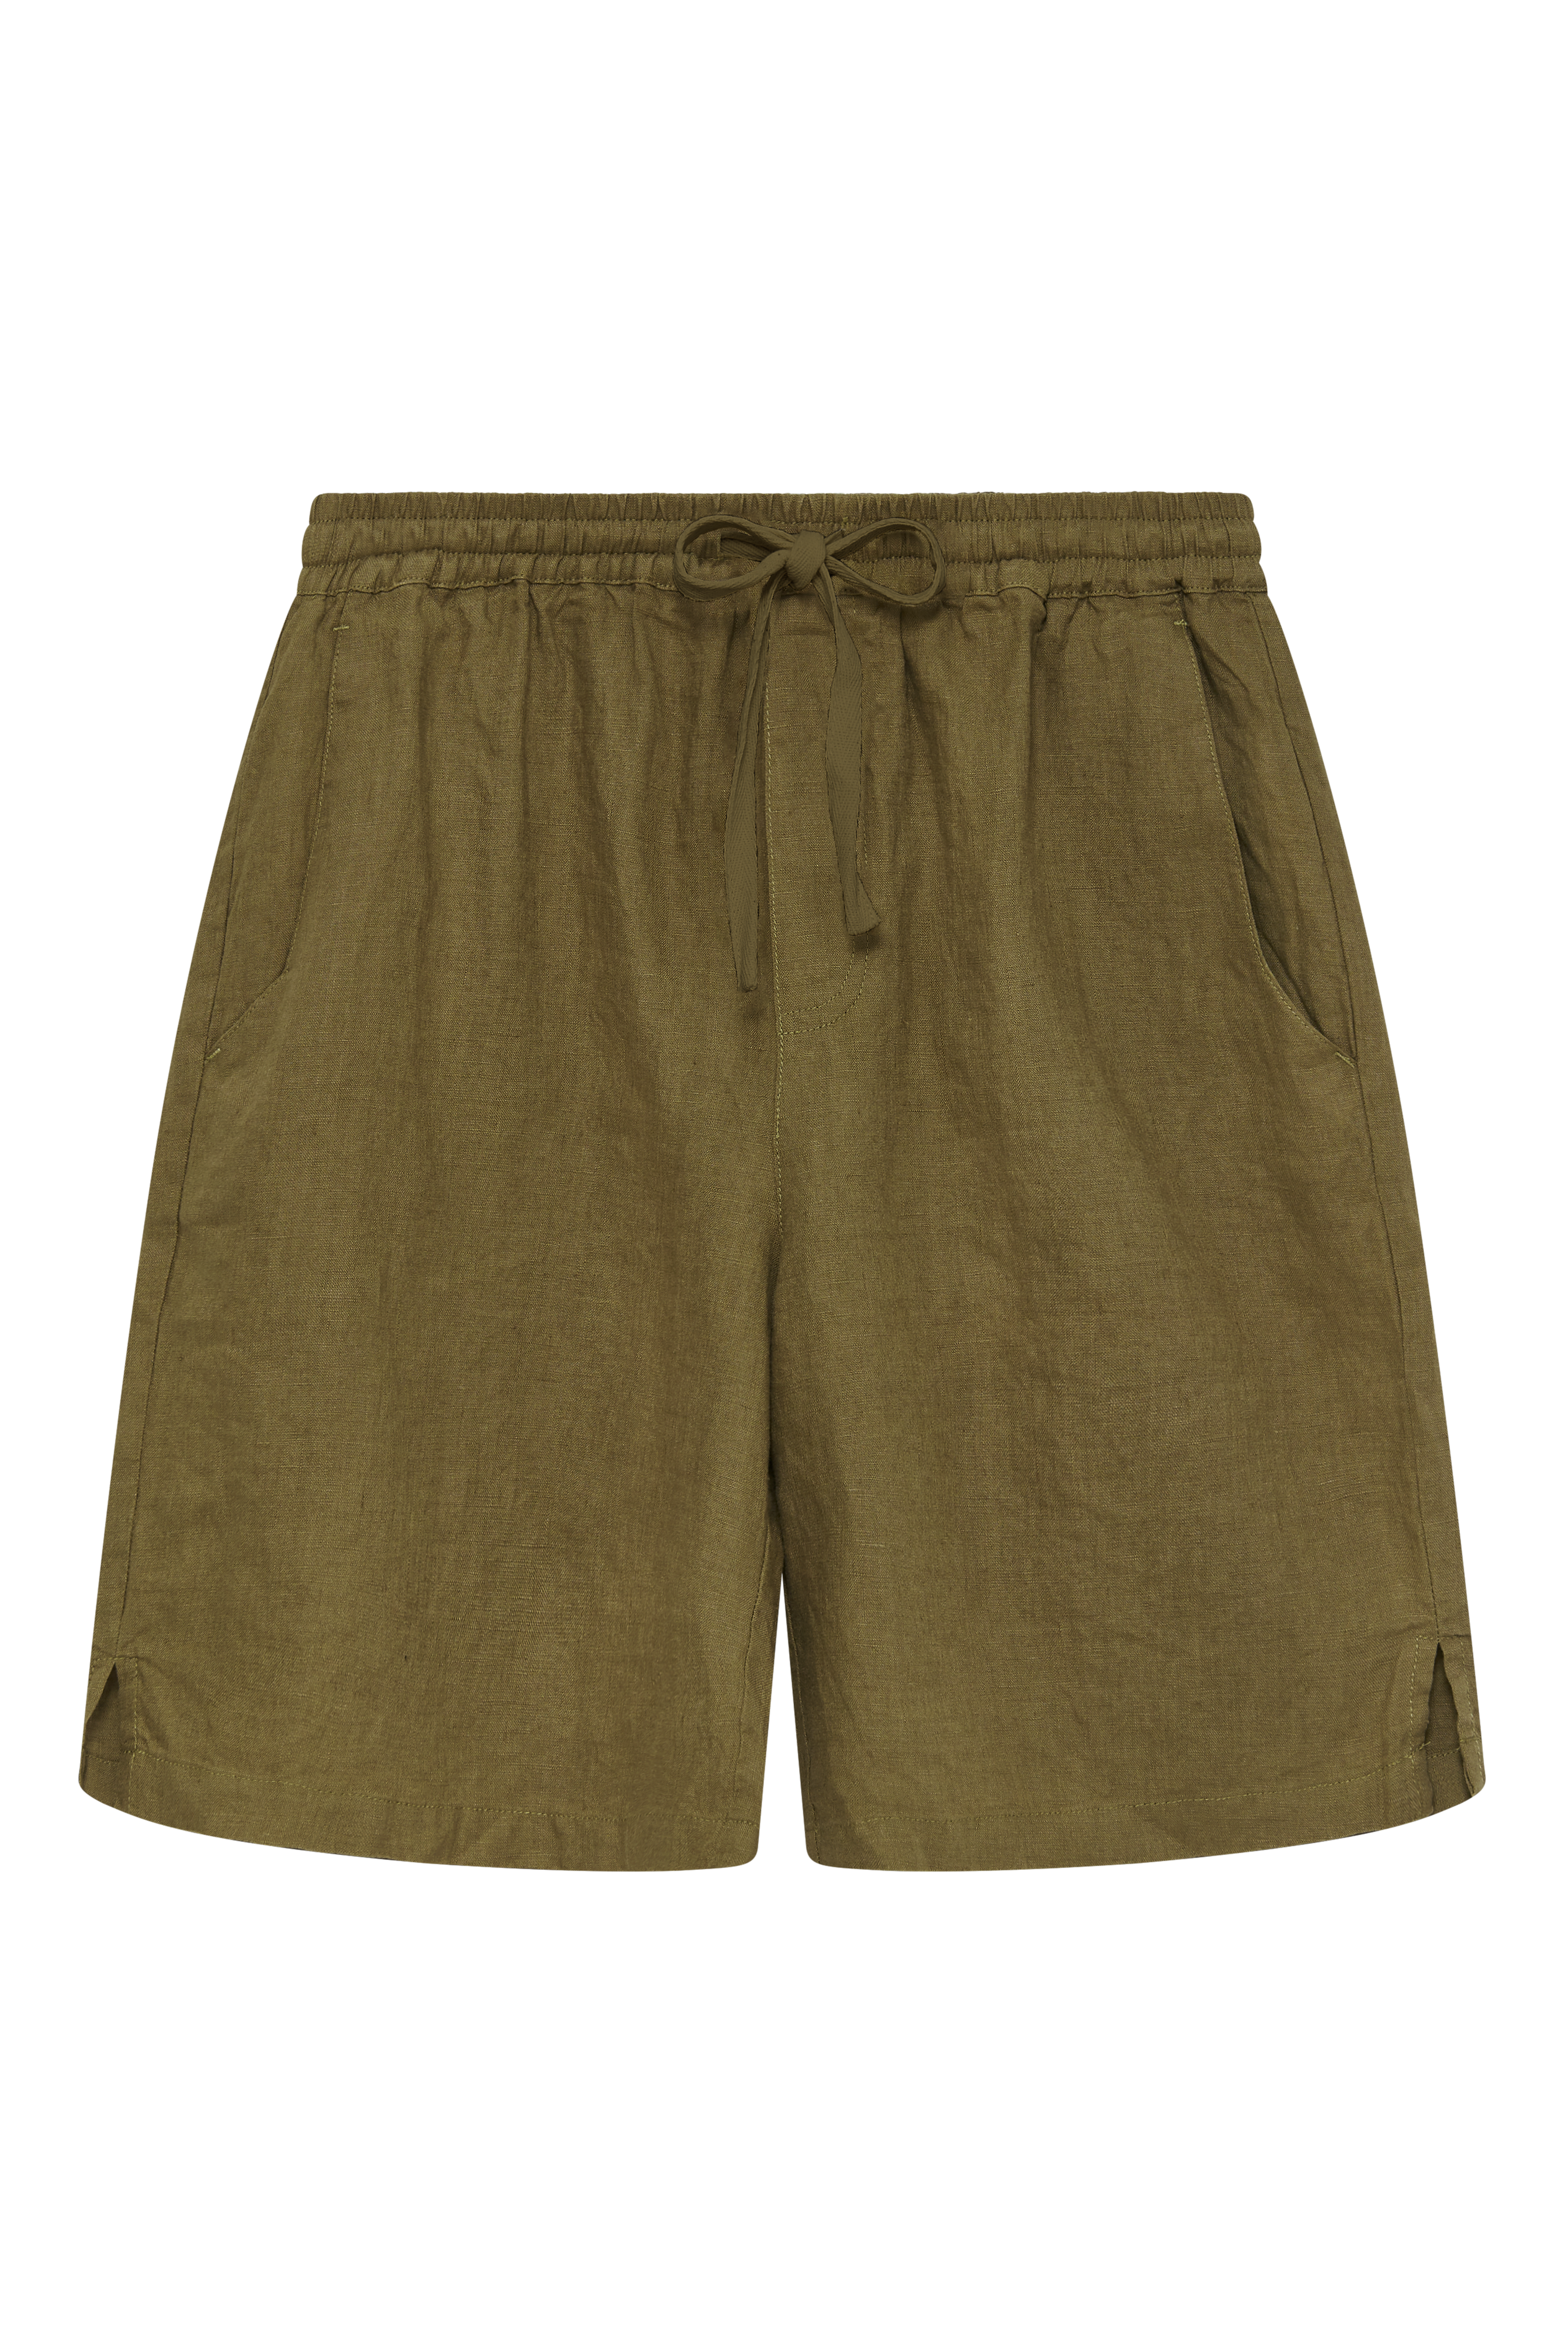 Men’s Green Jerry - Khaki Linen Shorts Large Komodo